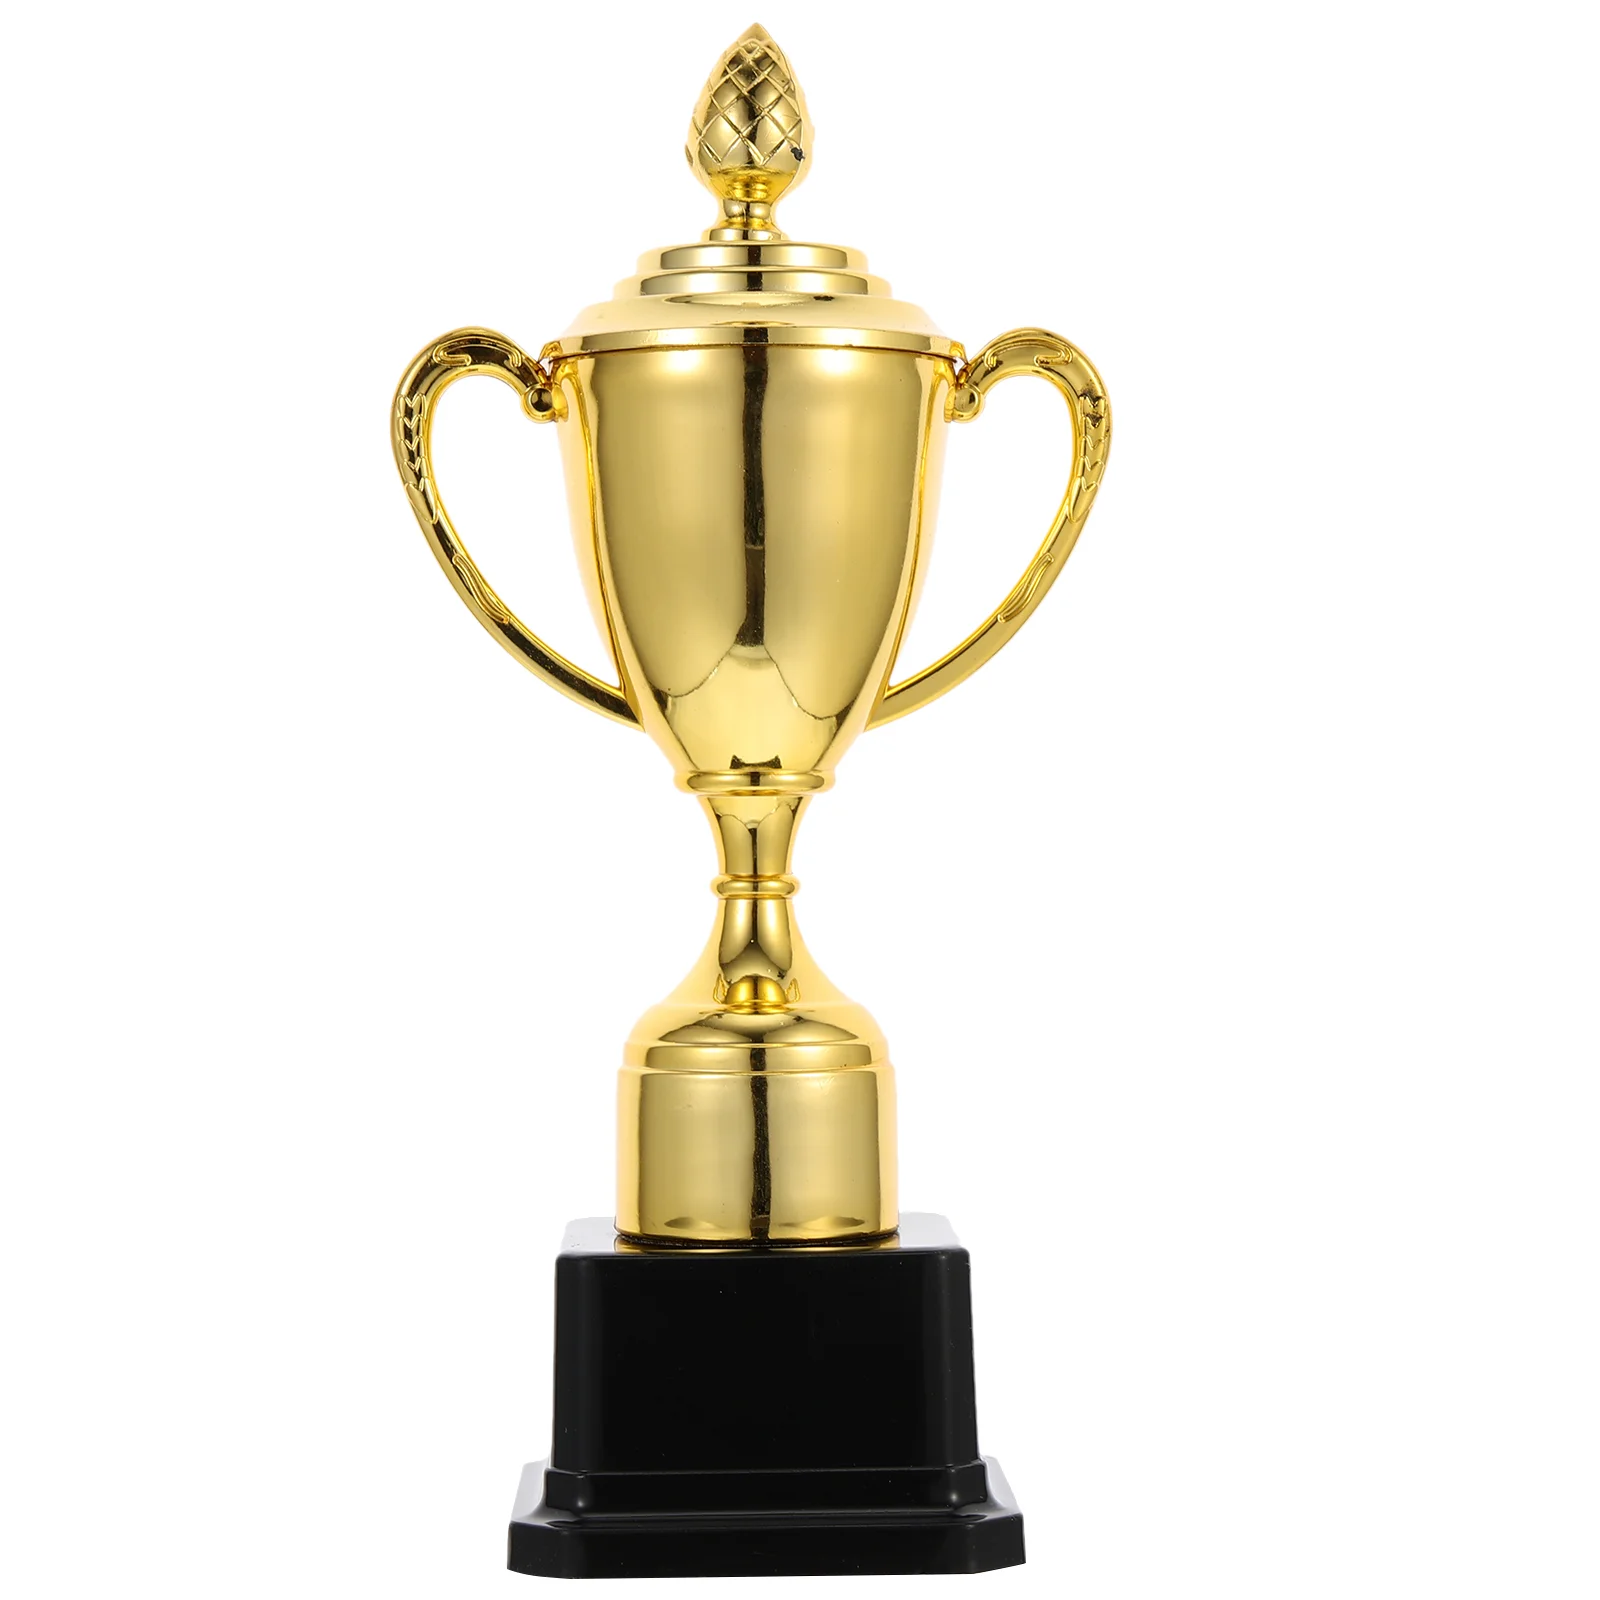 

Trophy Cup Award Trophies Gold Mini Awards Winner Kids Party Plastic Competition Prize Trophys Golden Cups Reward Favors Game